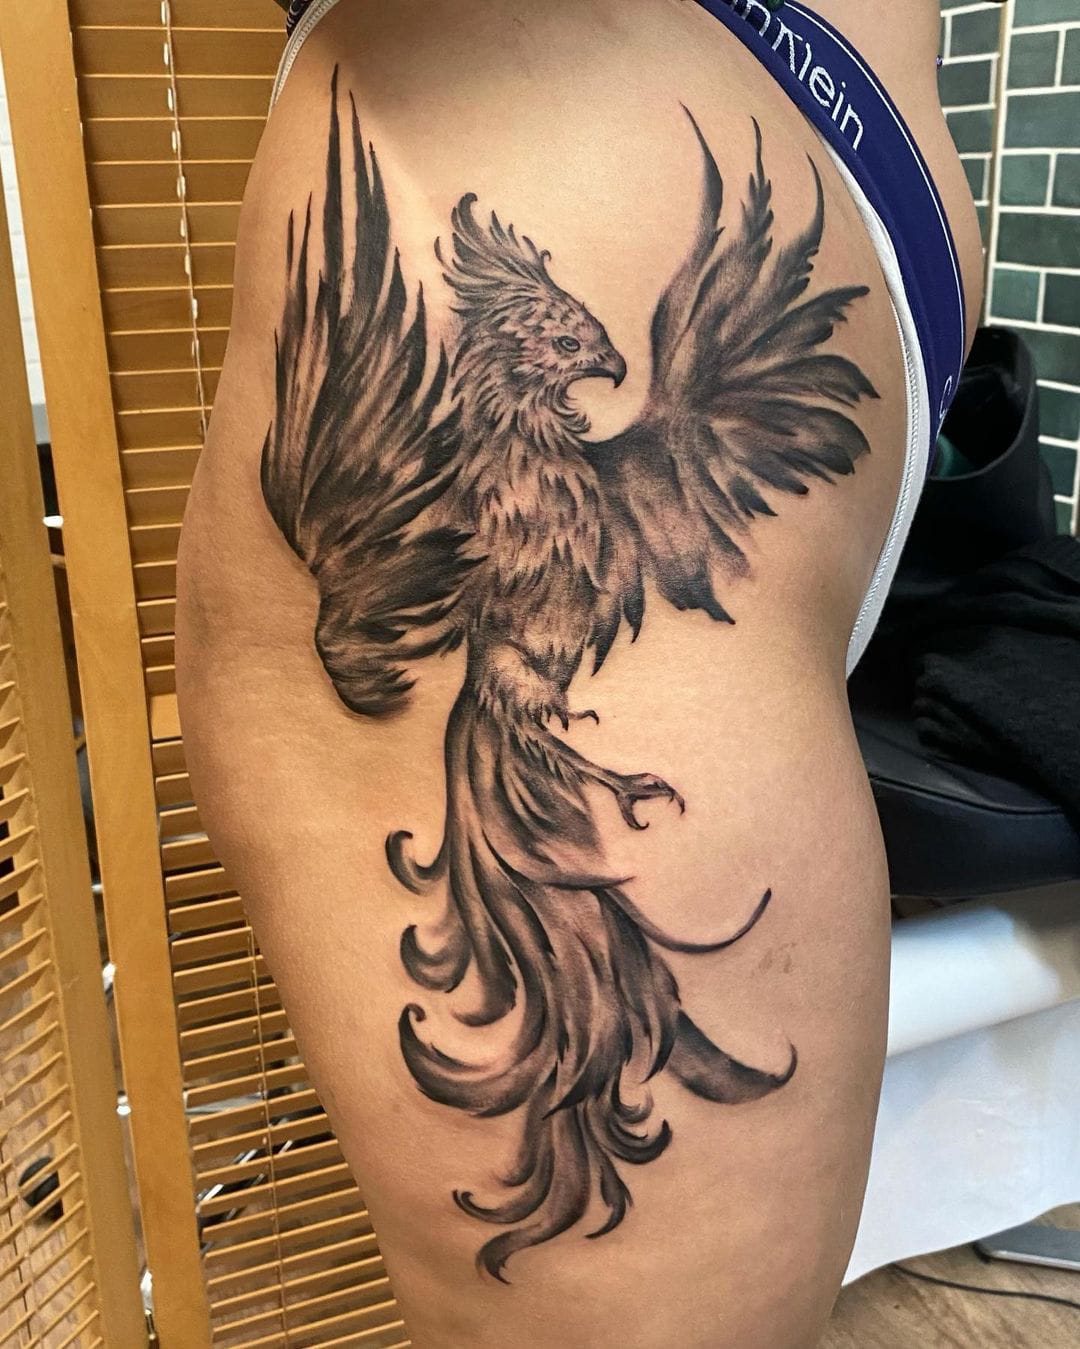 Mimp Tattoo Bangkok Thailand on Instagram Realistic Phoenix tattoo by  Jack artist งานแกนกฟนกซ ผลงานชางแจค mimptattoobangkok